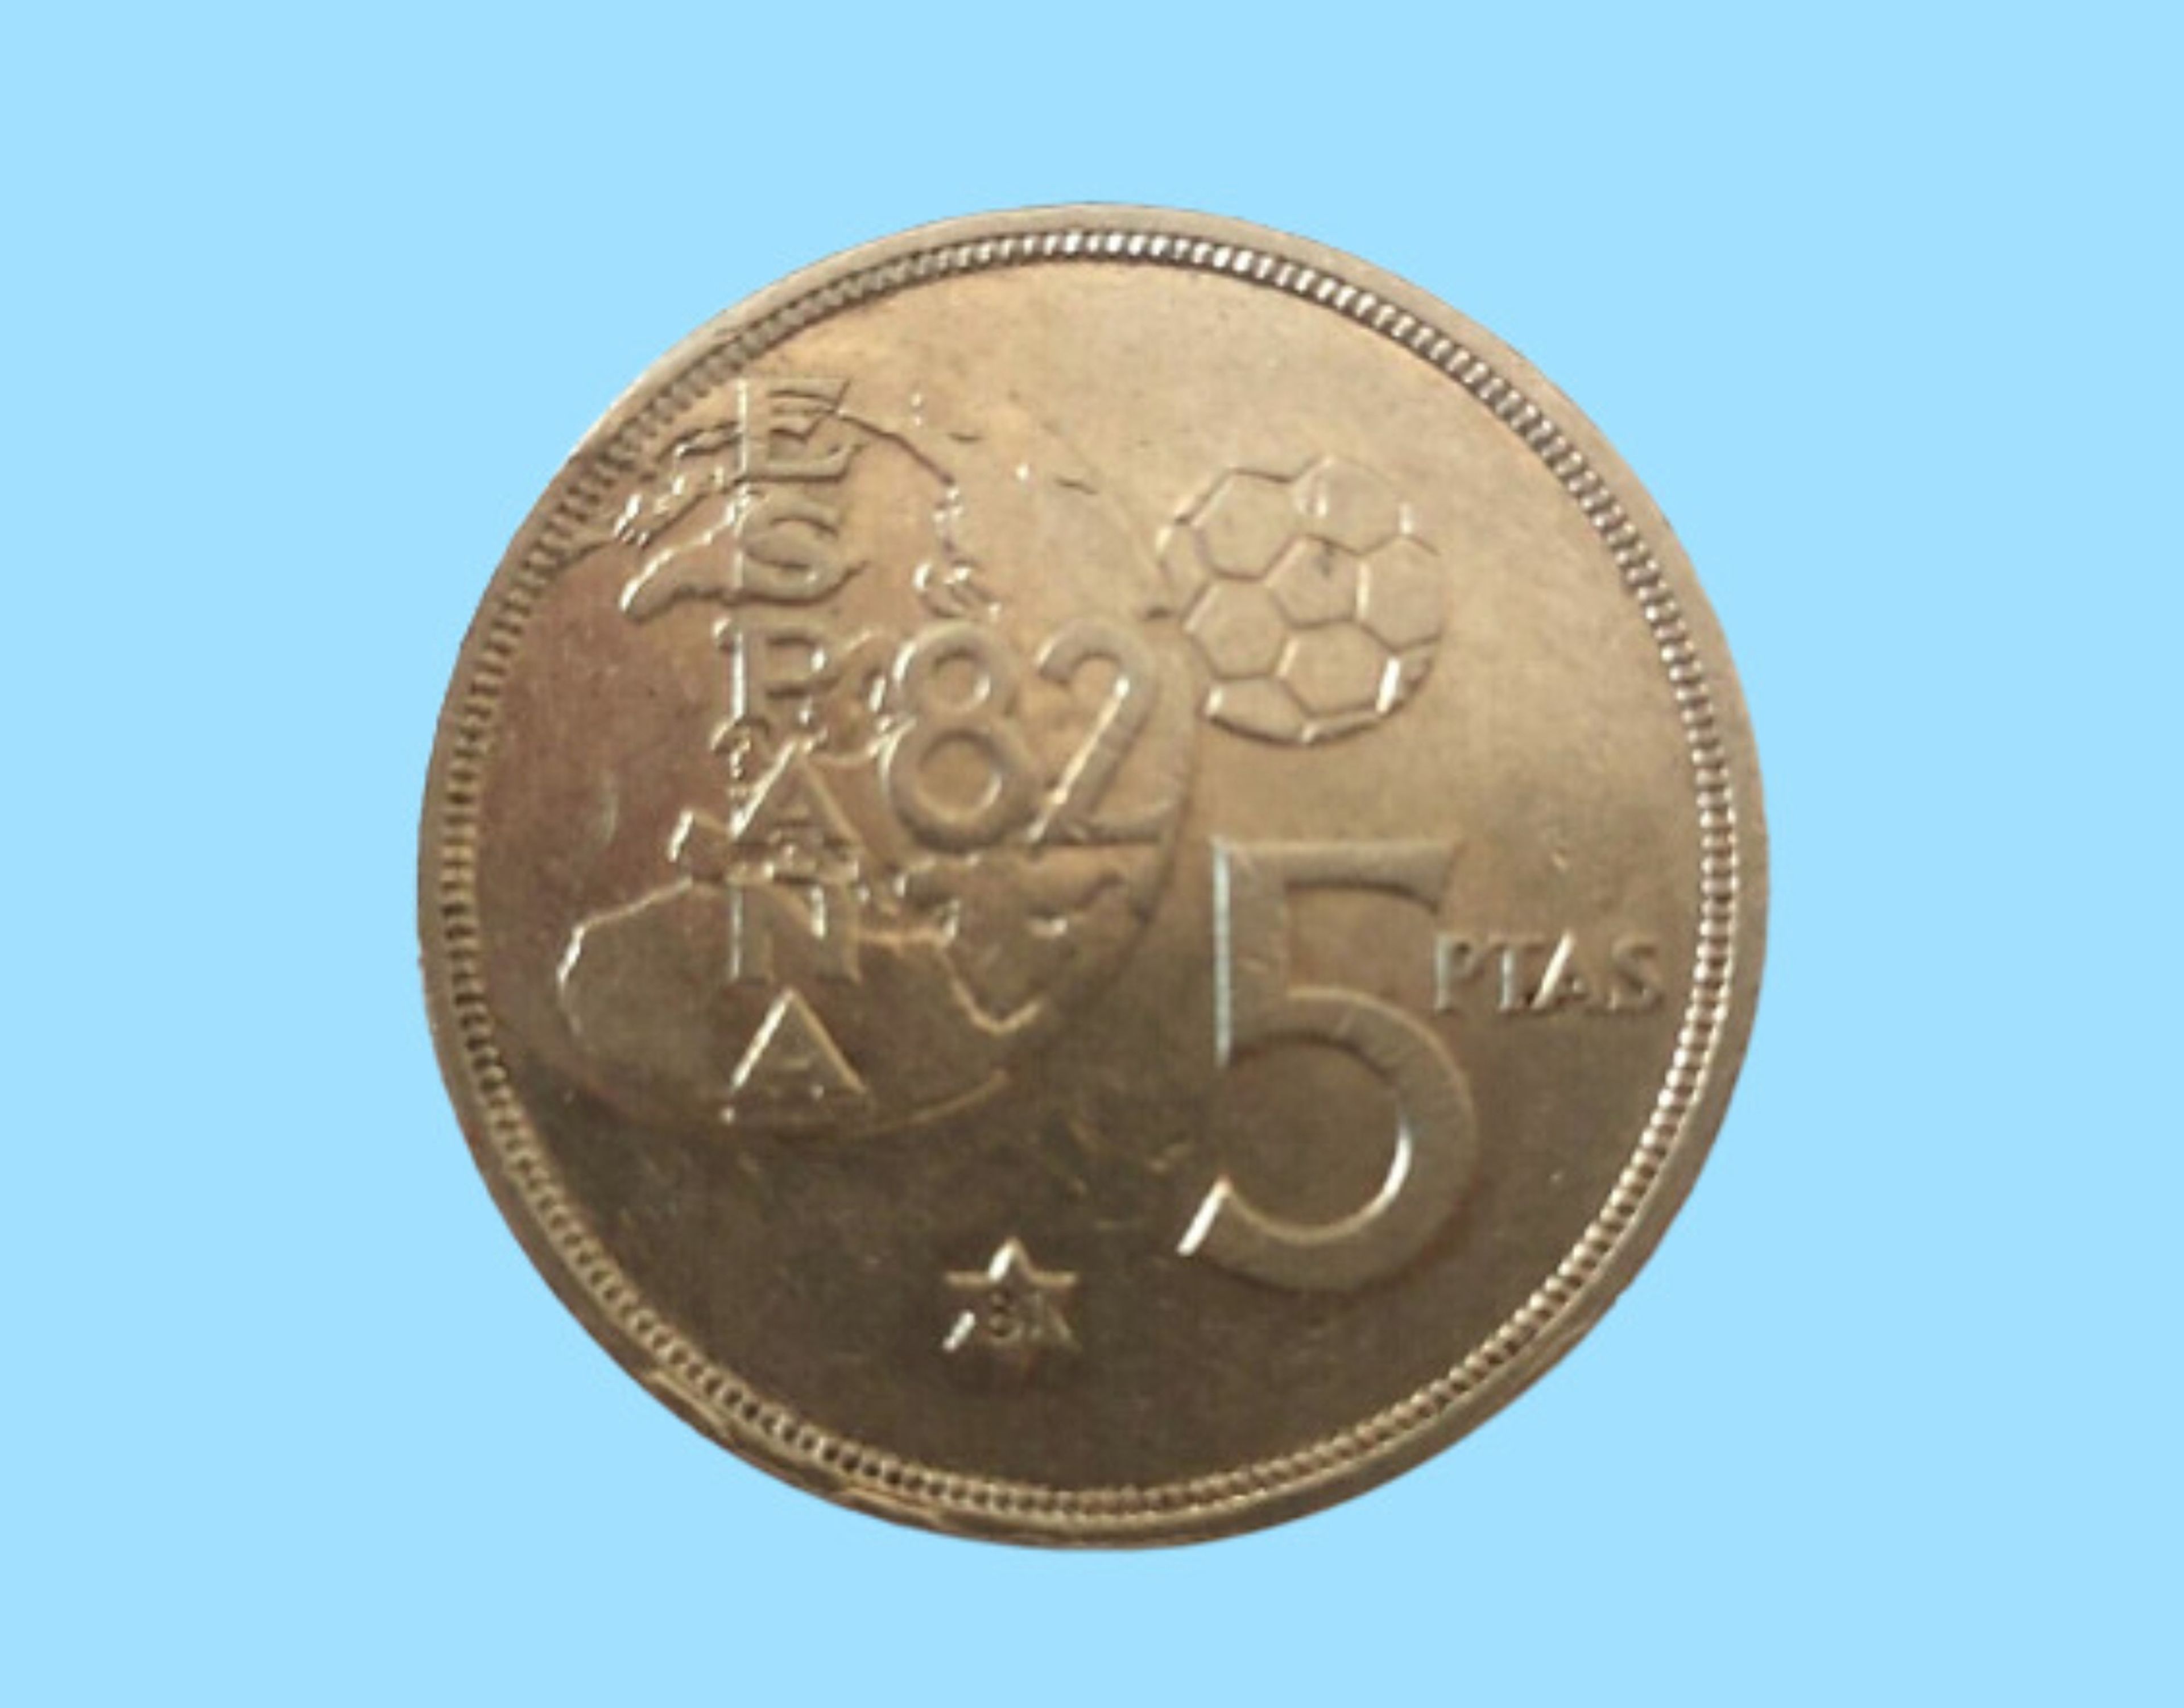 5 pesetas de 1980